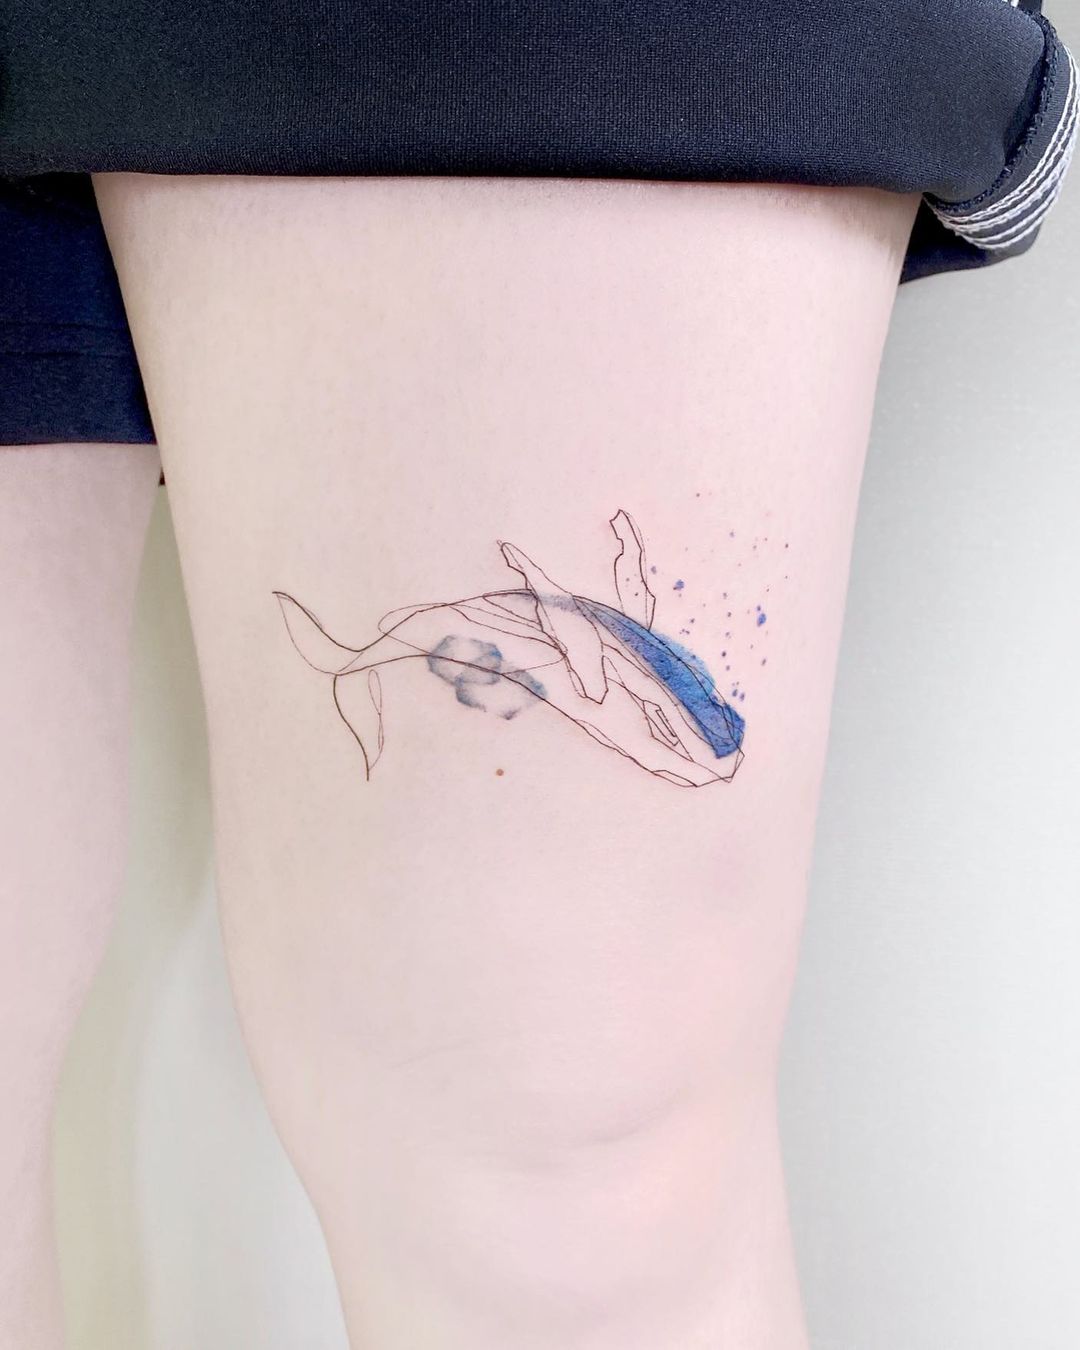 Fineline dolphin tattoo by imfine tat